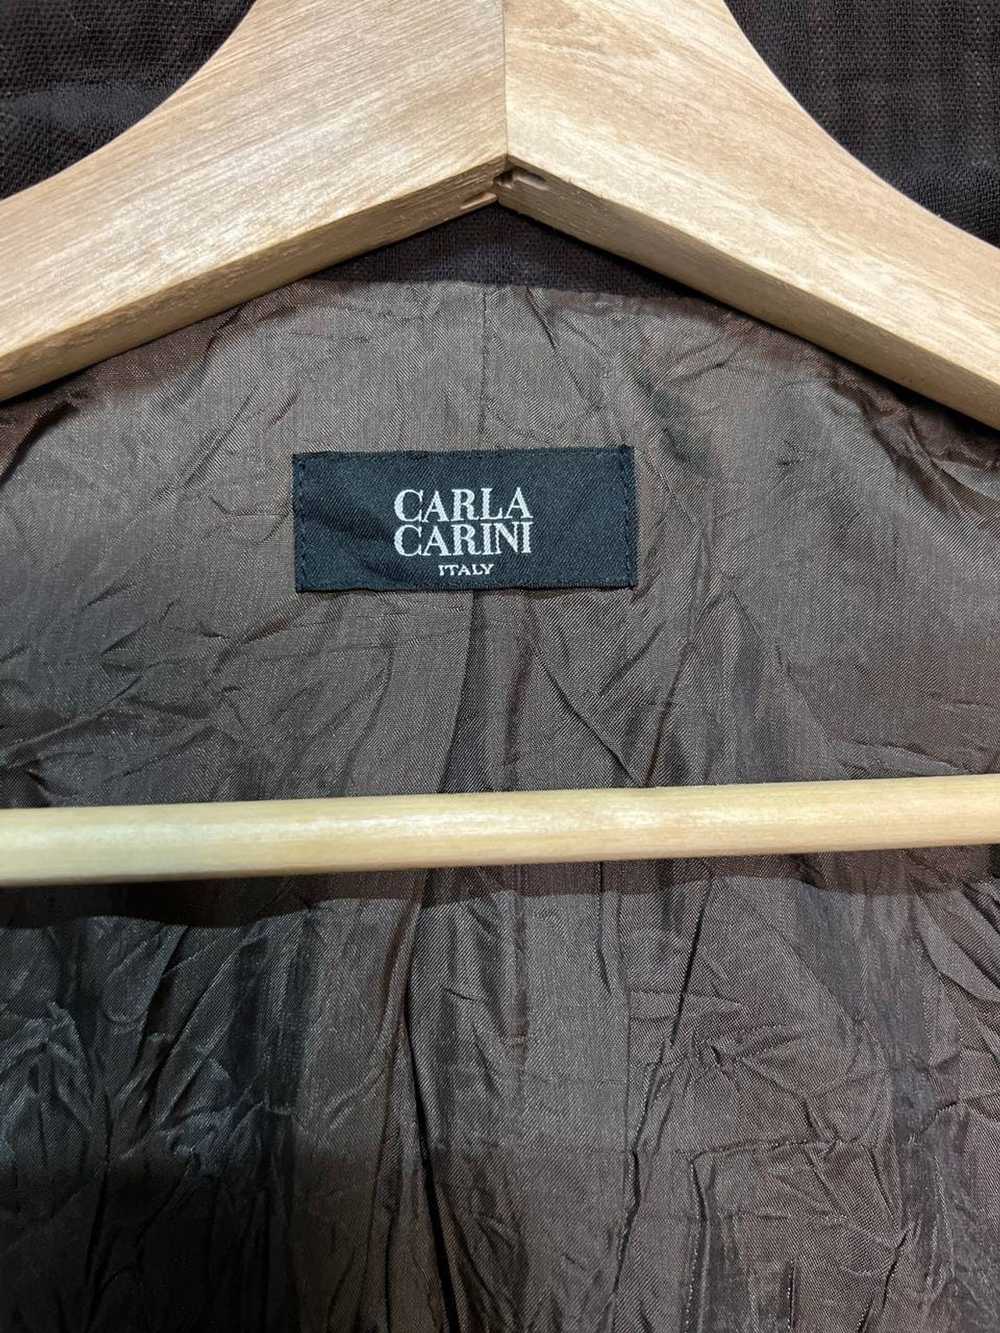 Vintage Carla Carini Made in Italy jacket - image 8